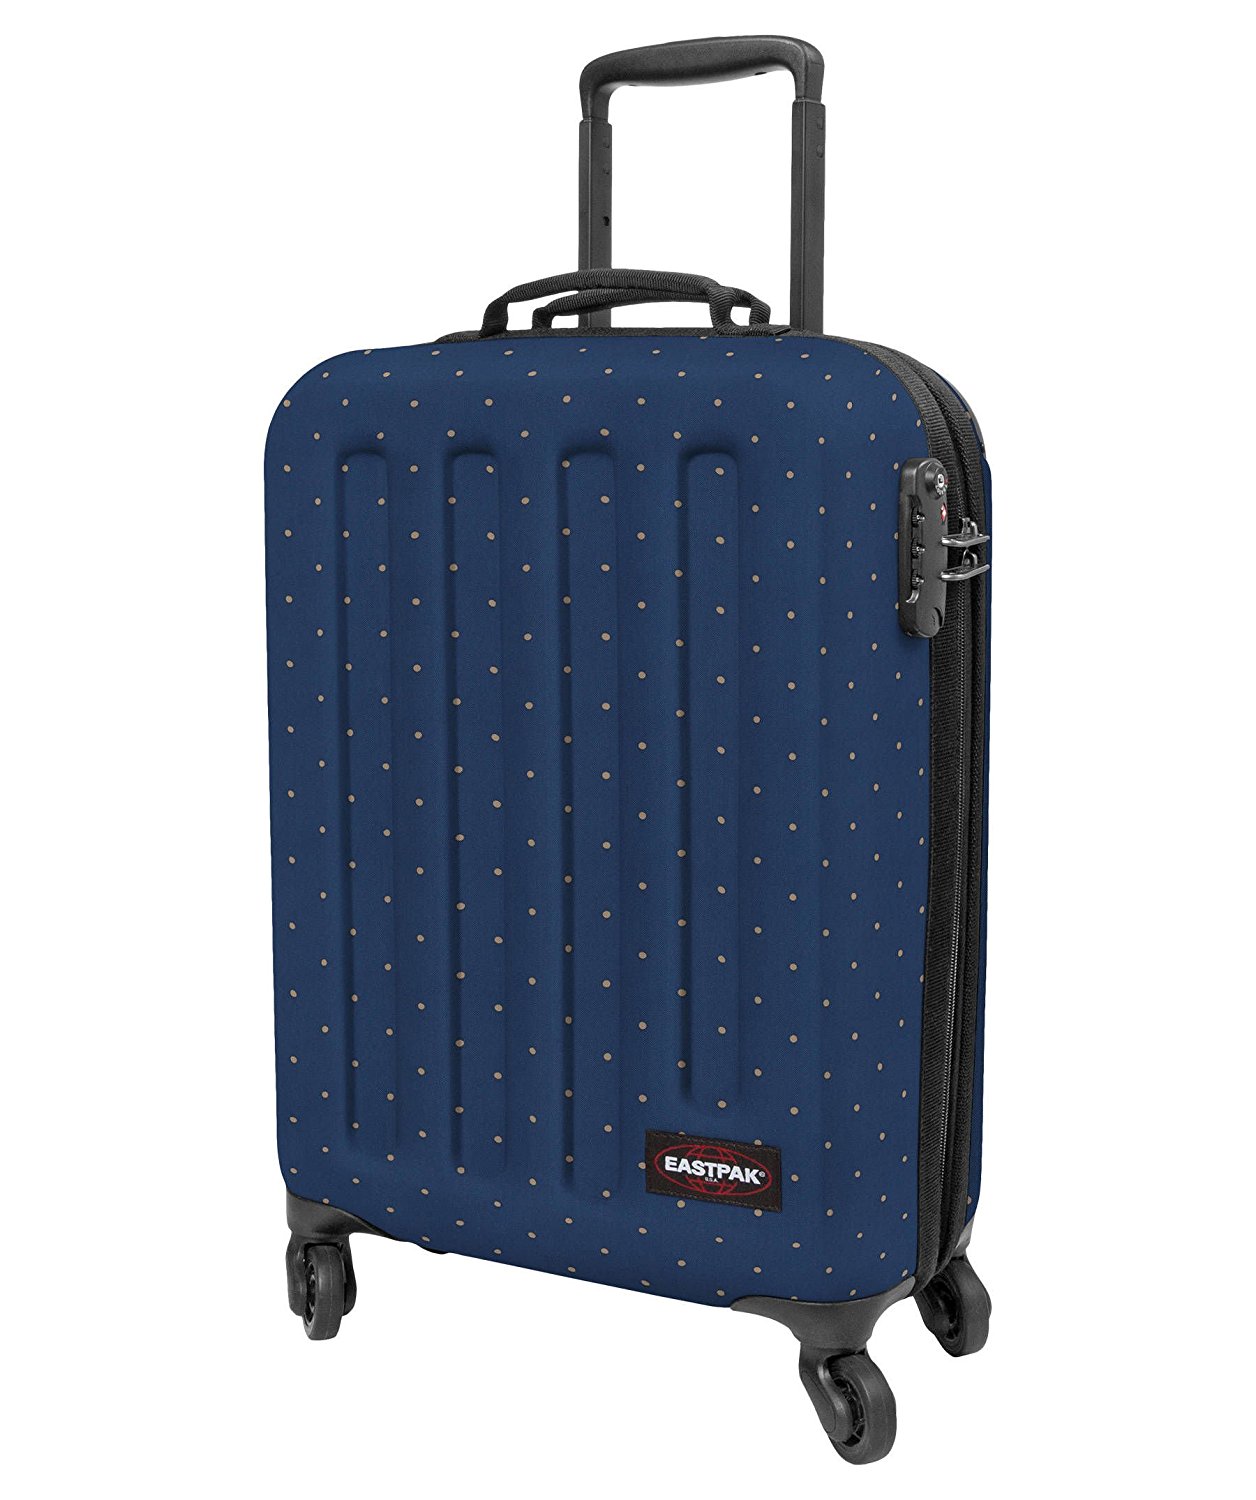 EASTPAK-nowa walizka podróżna na kółkach, kabinowa